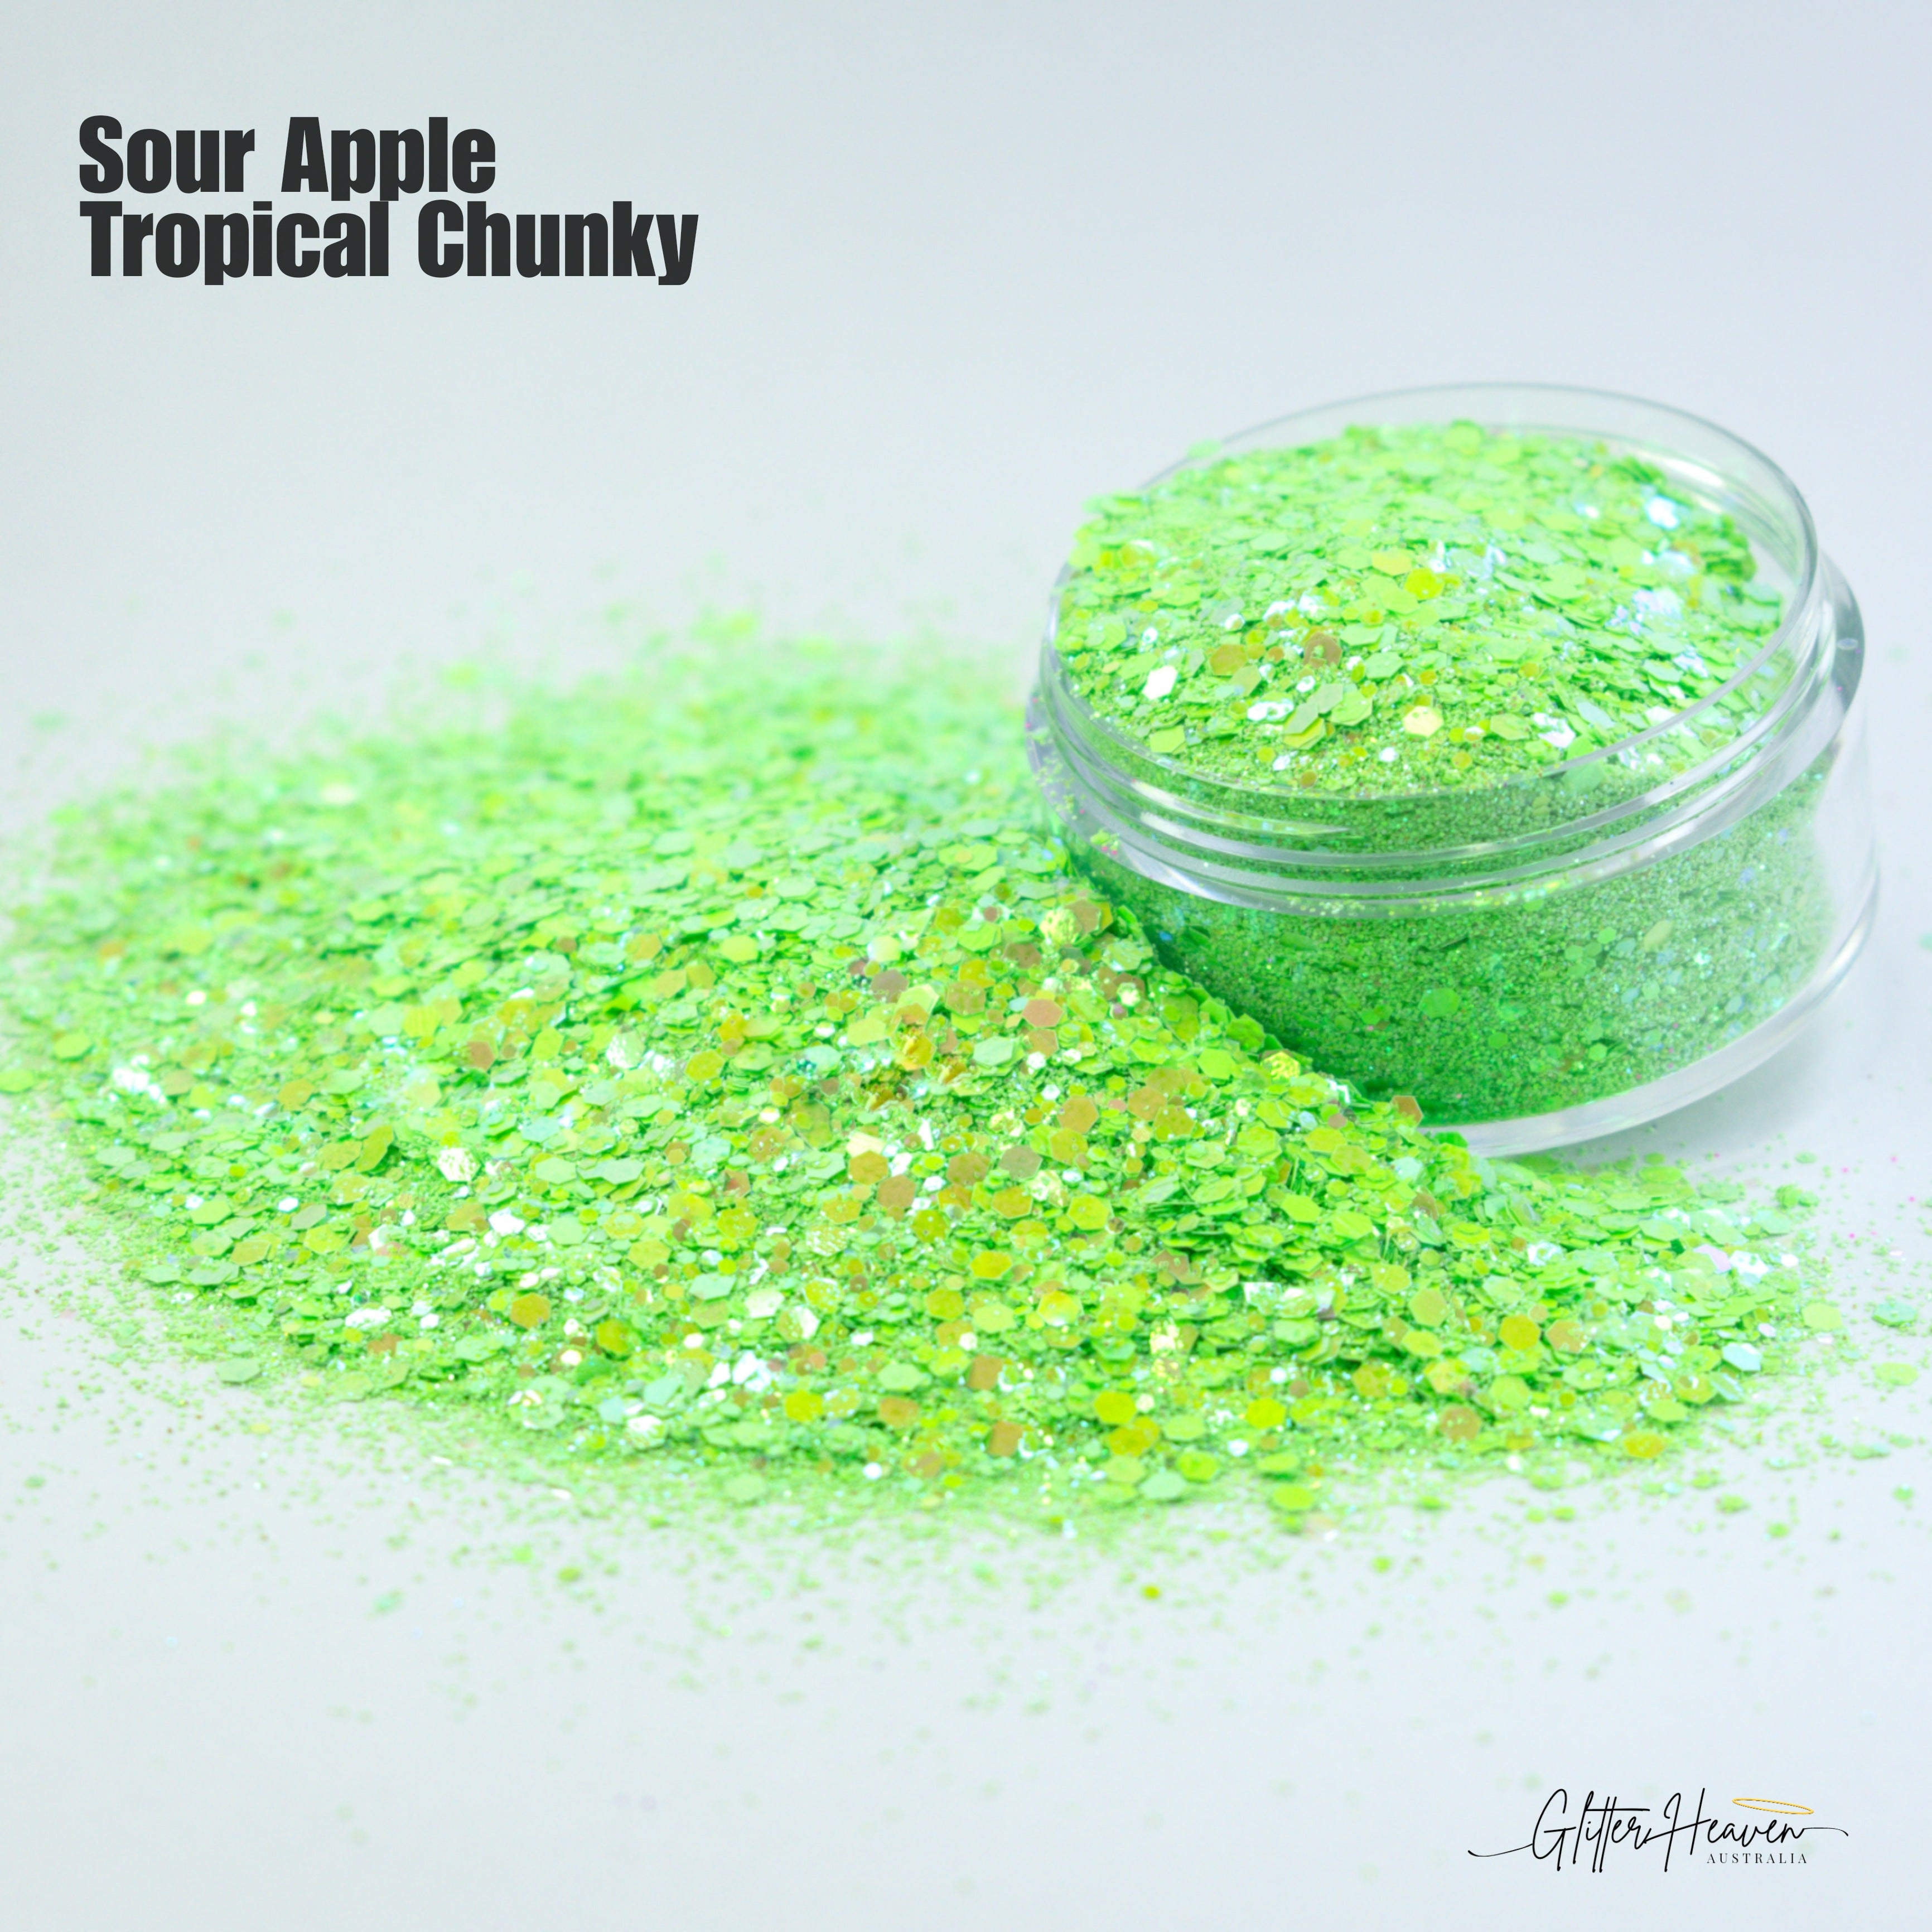 Sour Apple Chunky Tropical